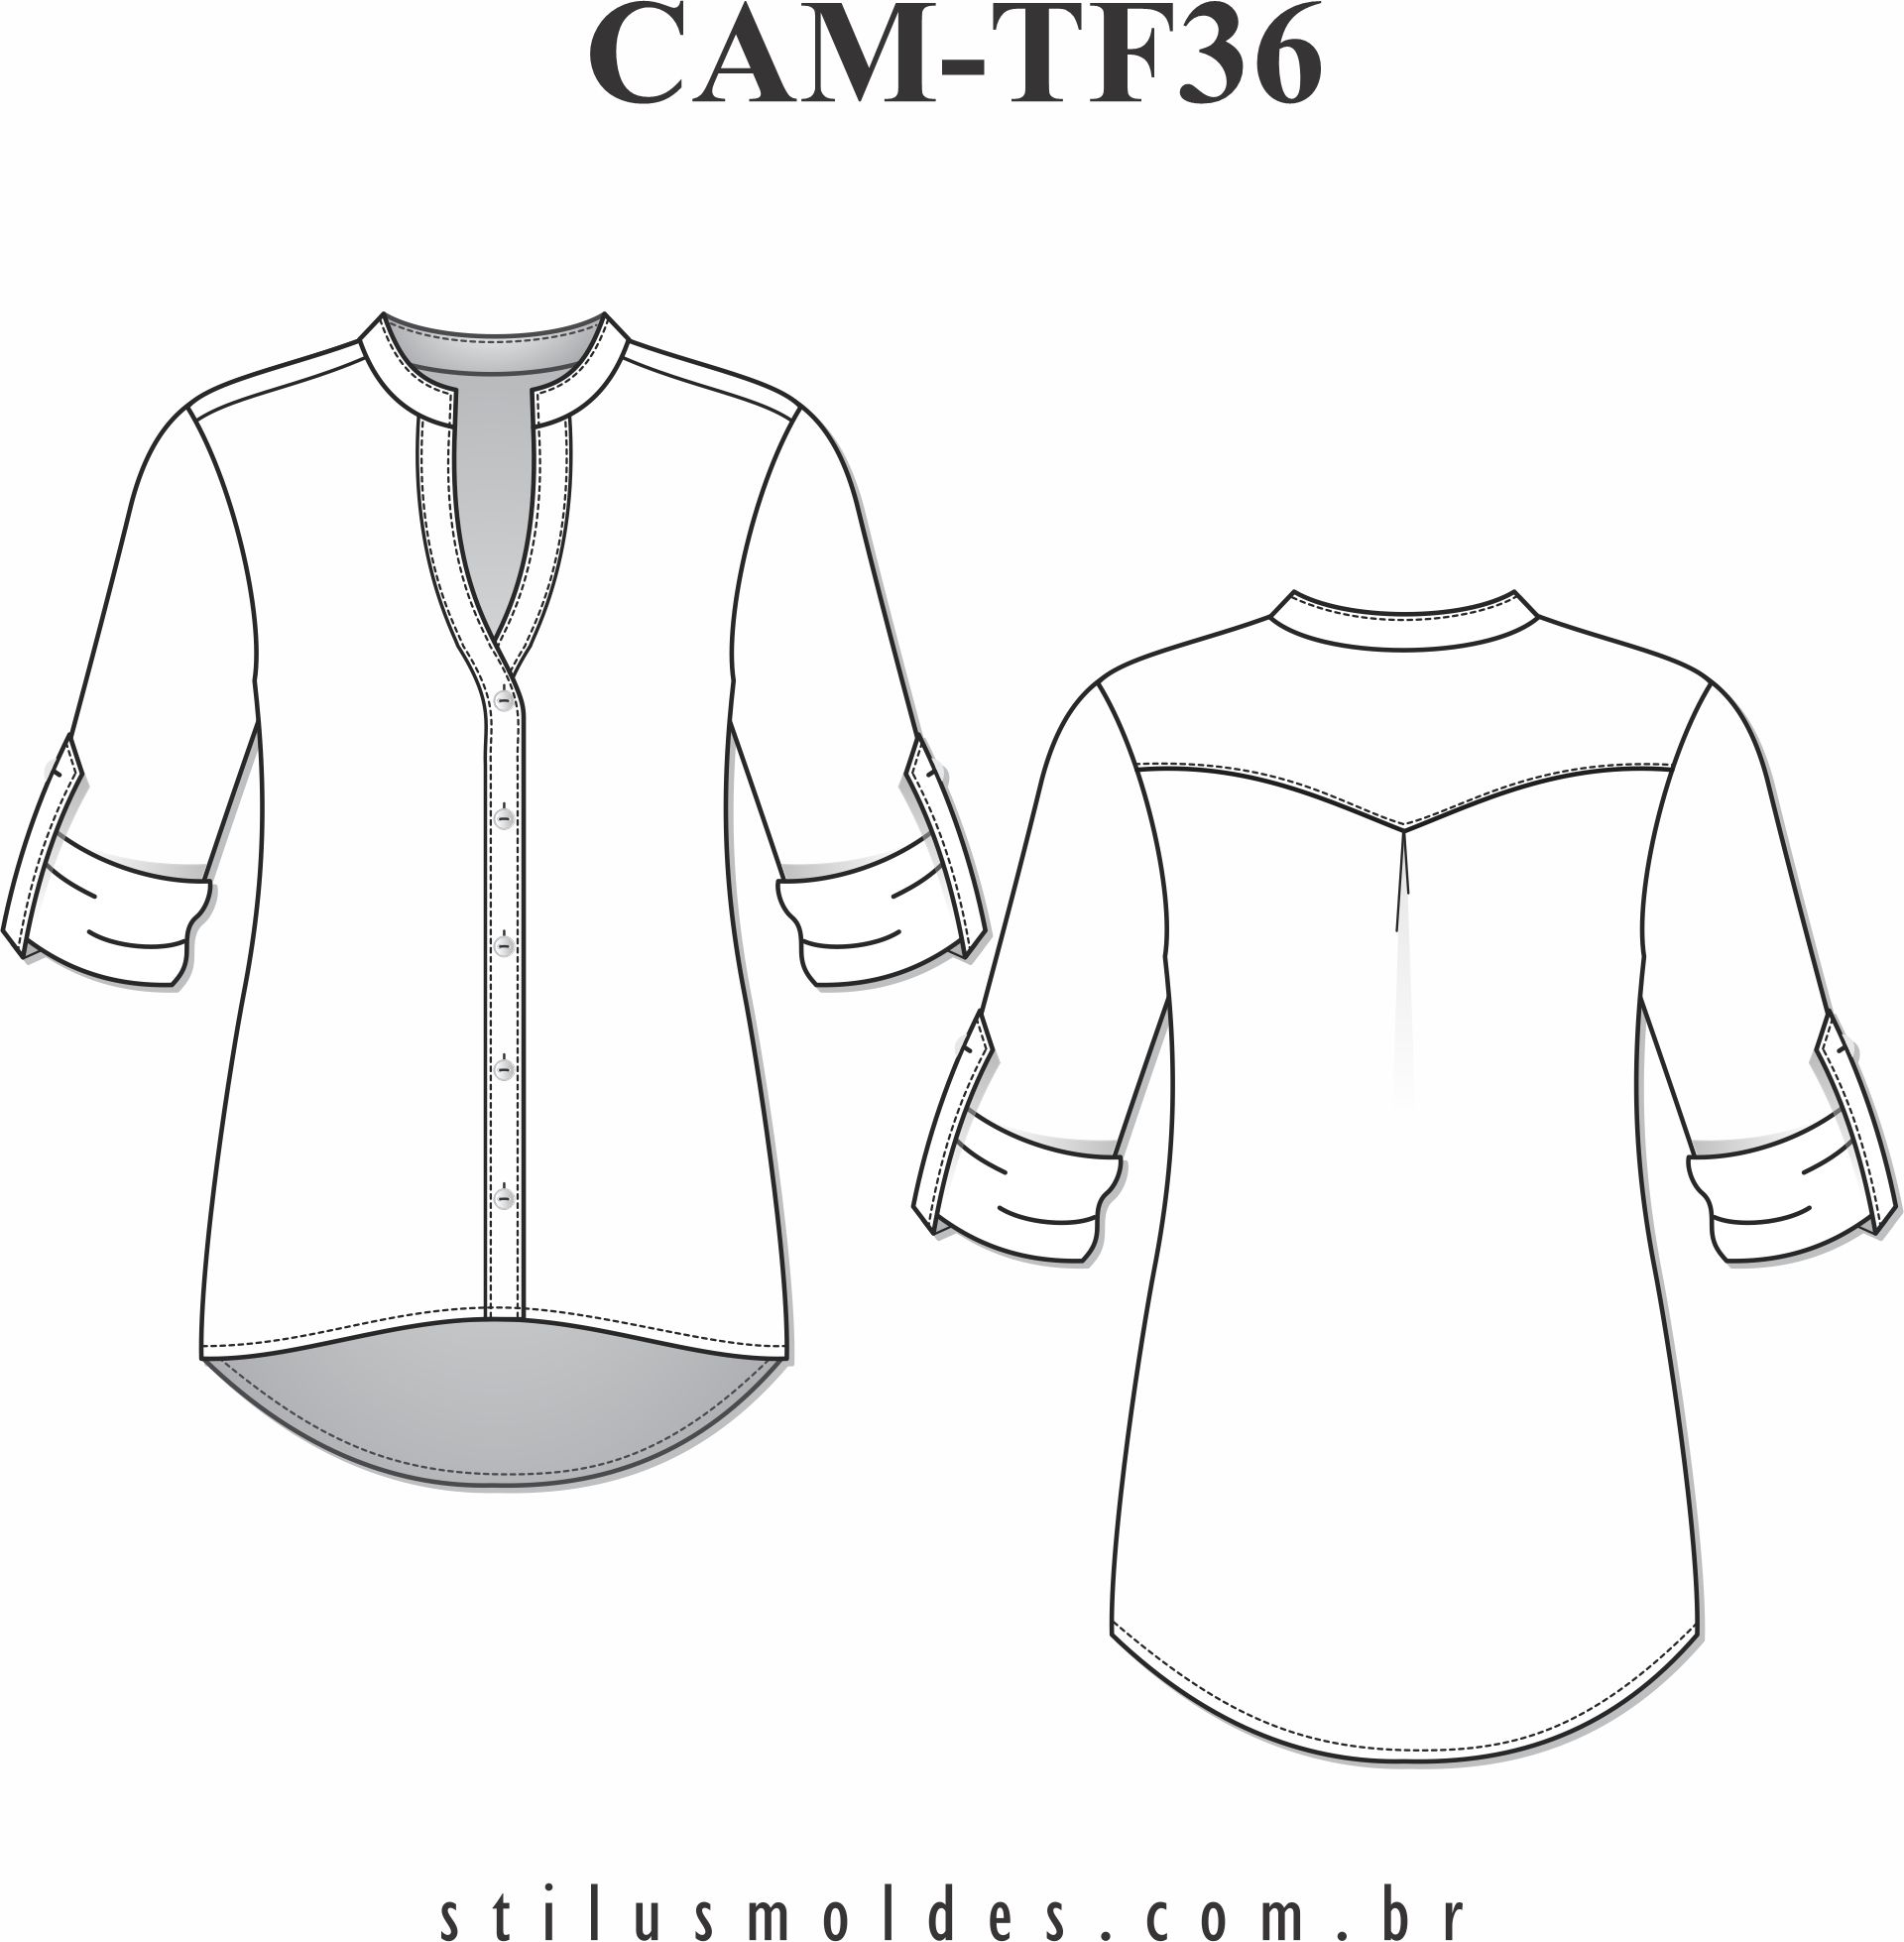 Camisa feminina (CAM-TF36) - Foto 0